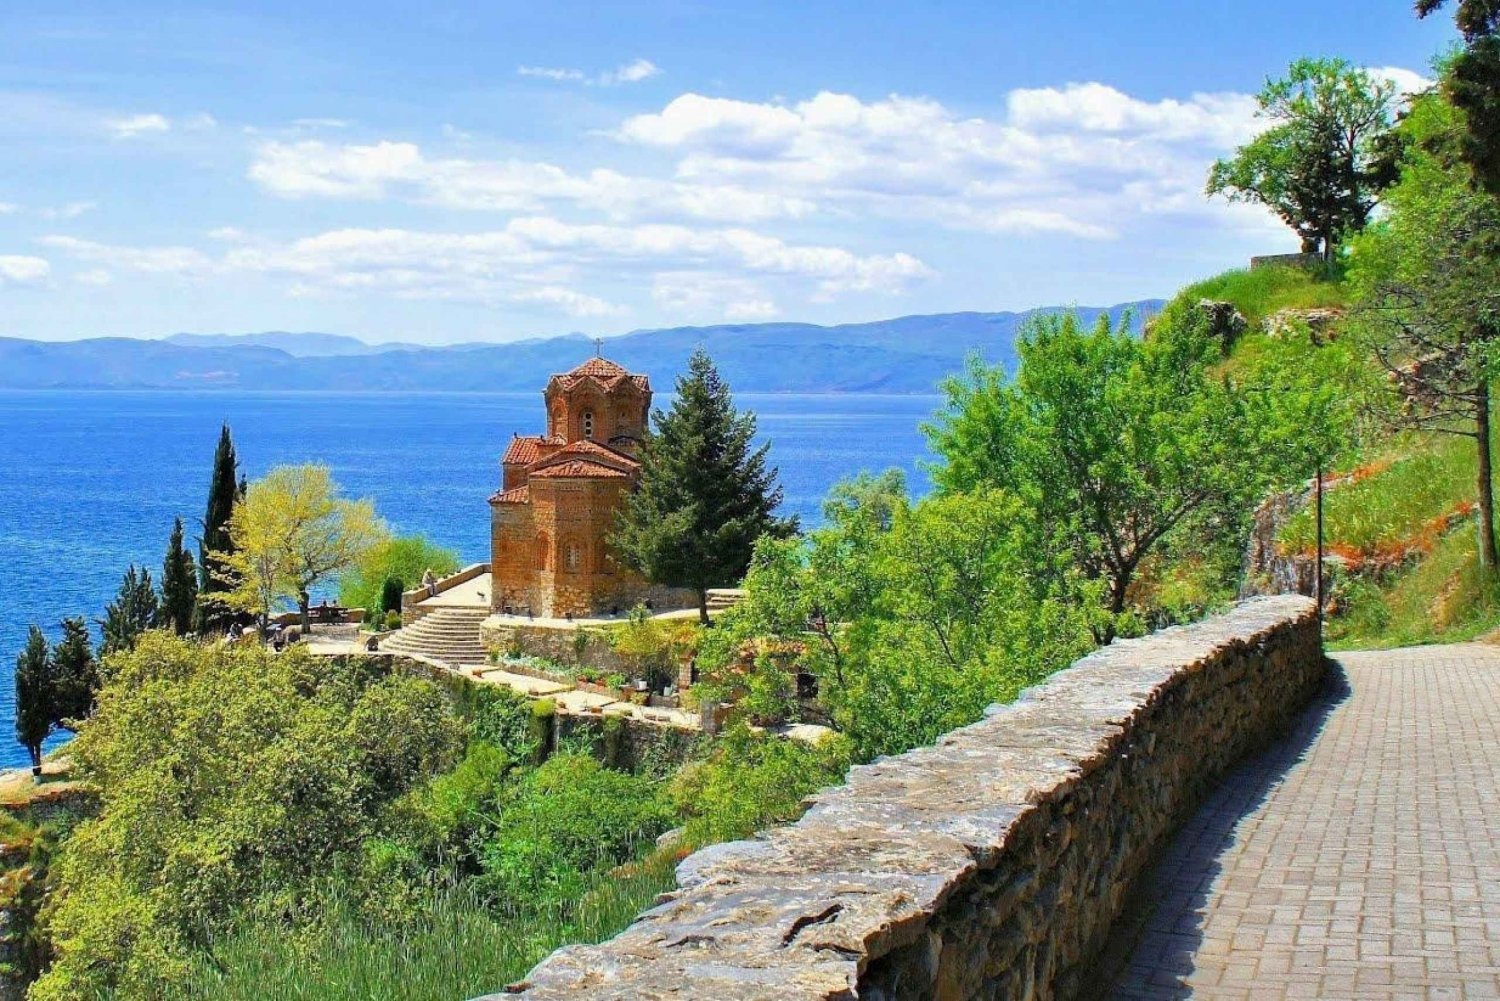 Stadsrondleiding Ohrid - het beste van Ohrid